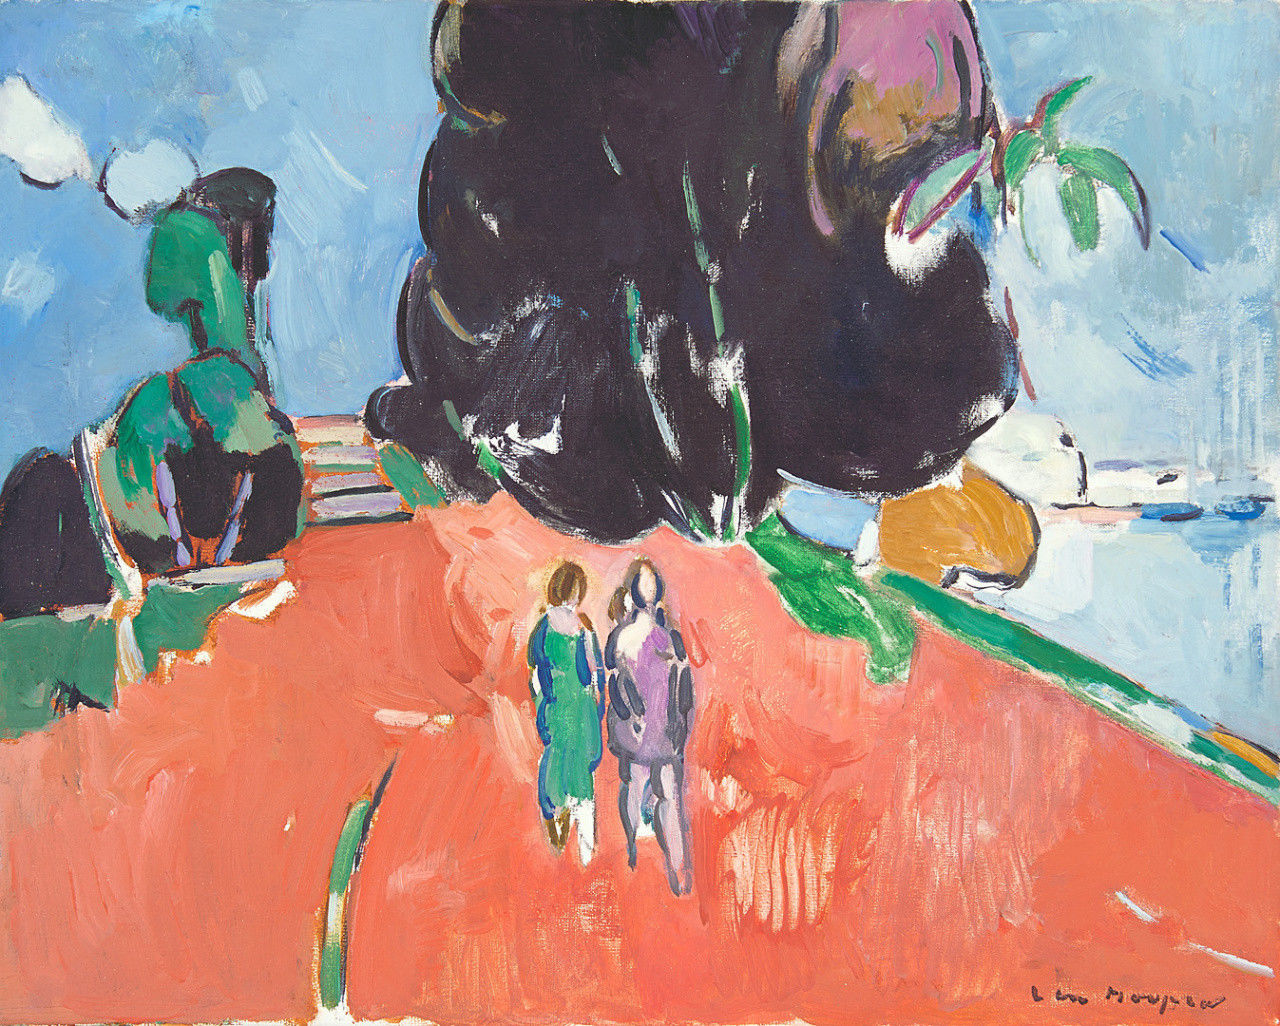 Pintura figurativa de Paul Hugo ten Hoopen, La Ciotat (1988)